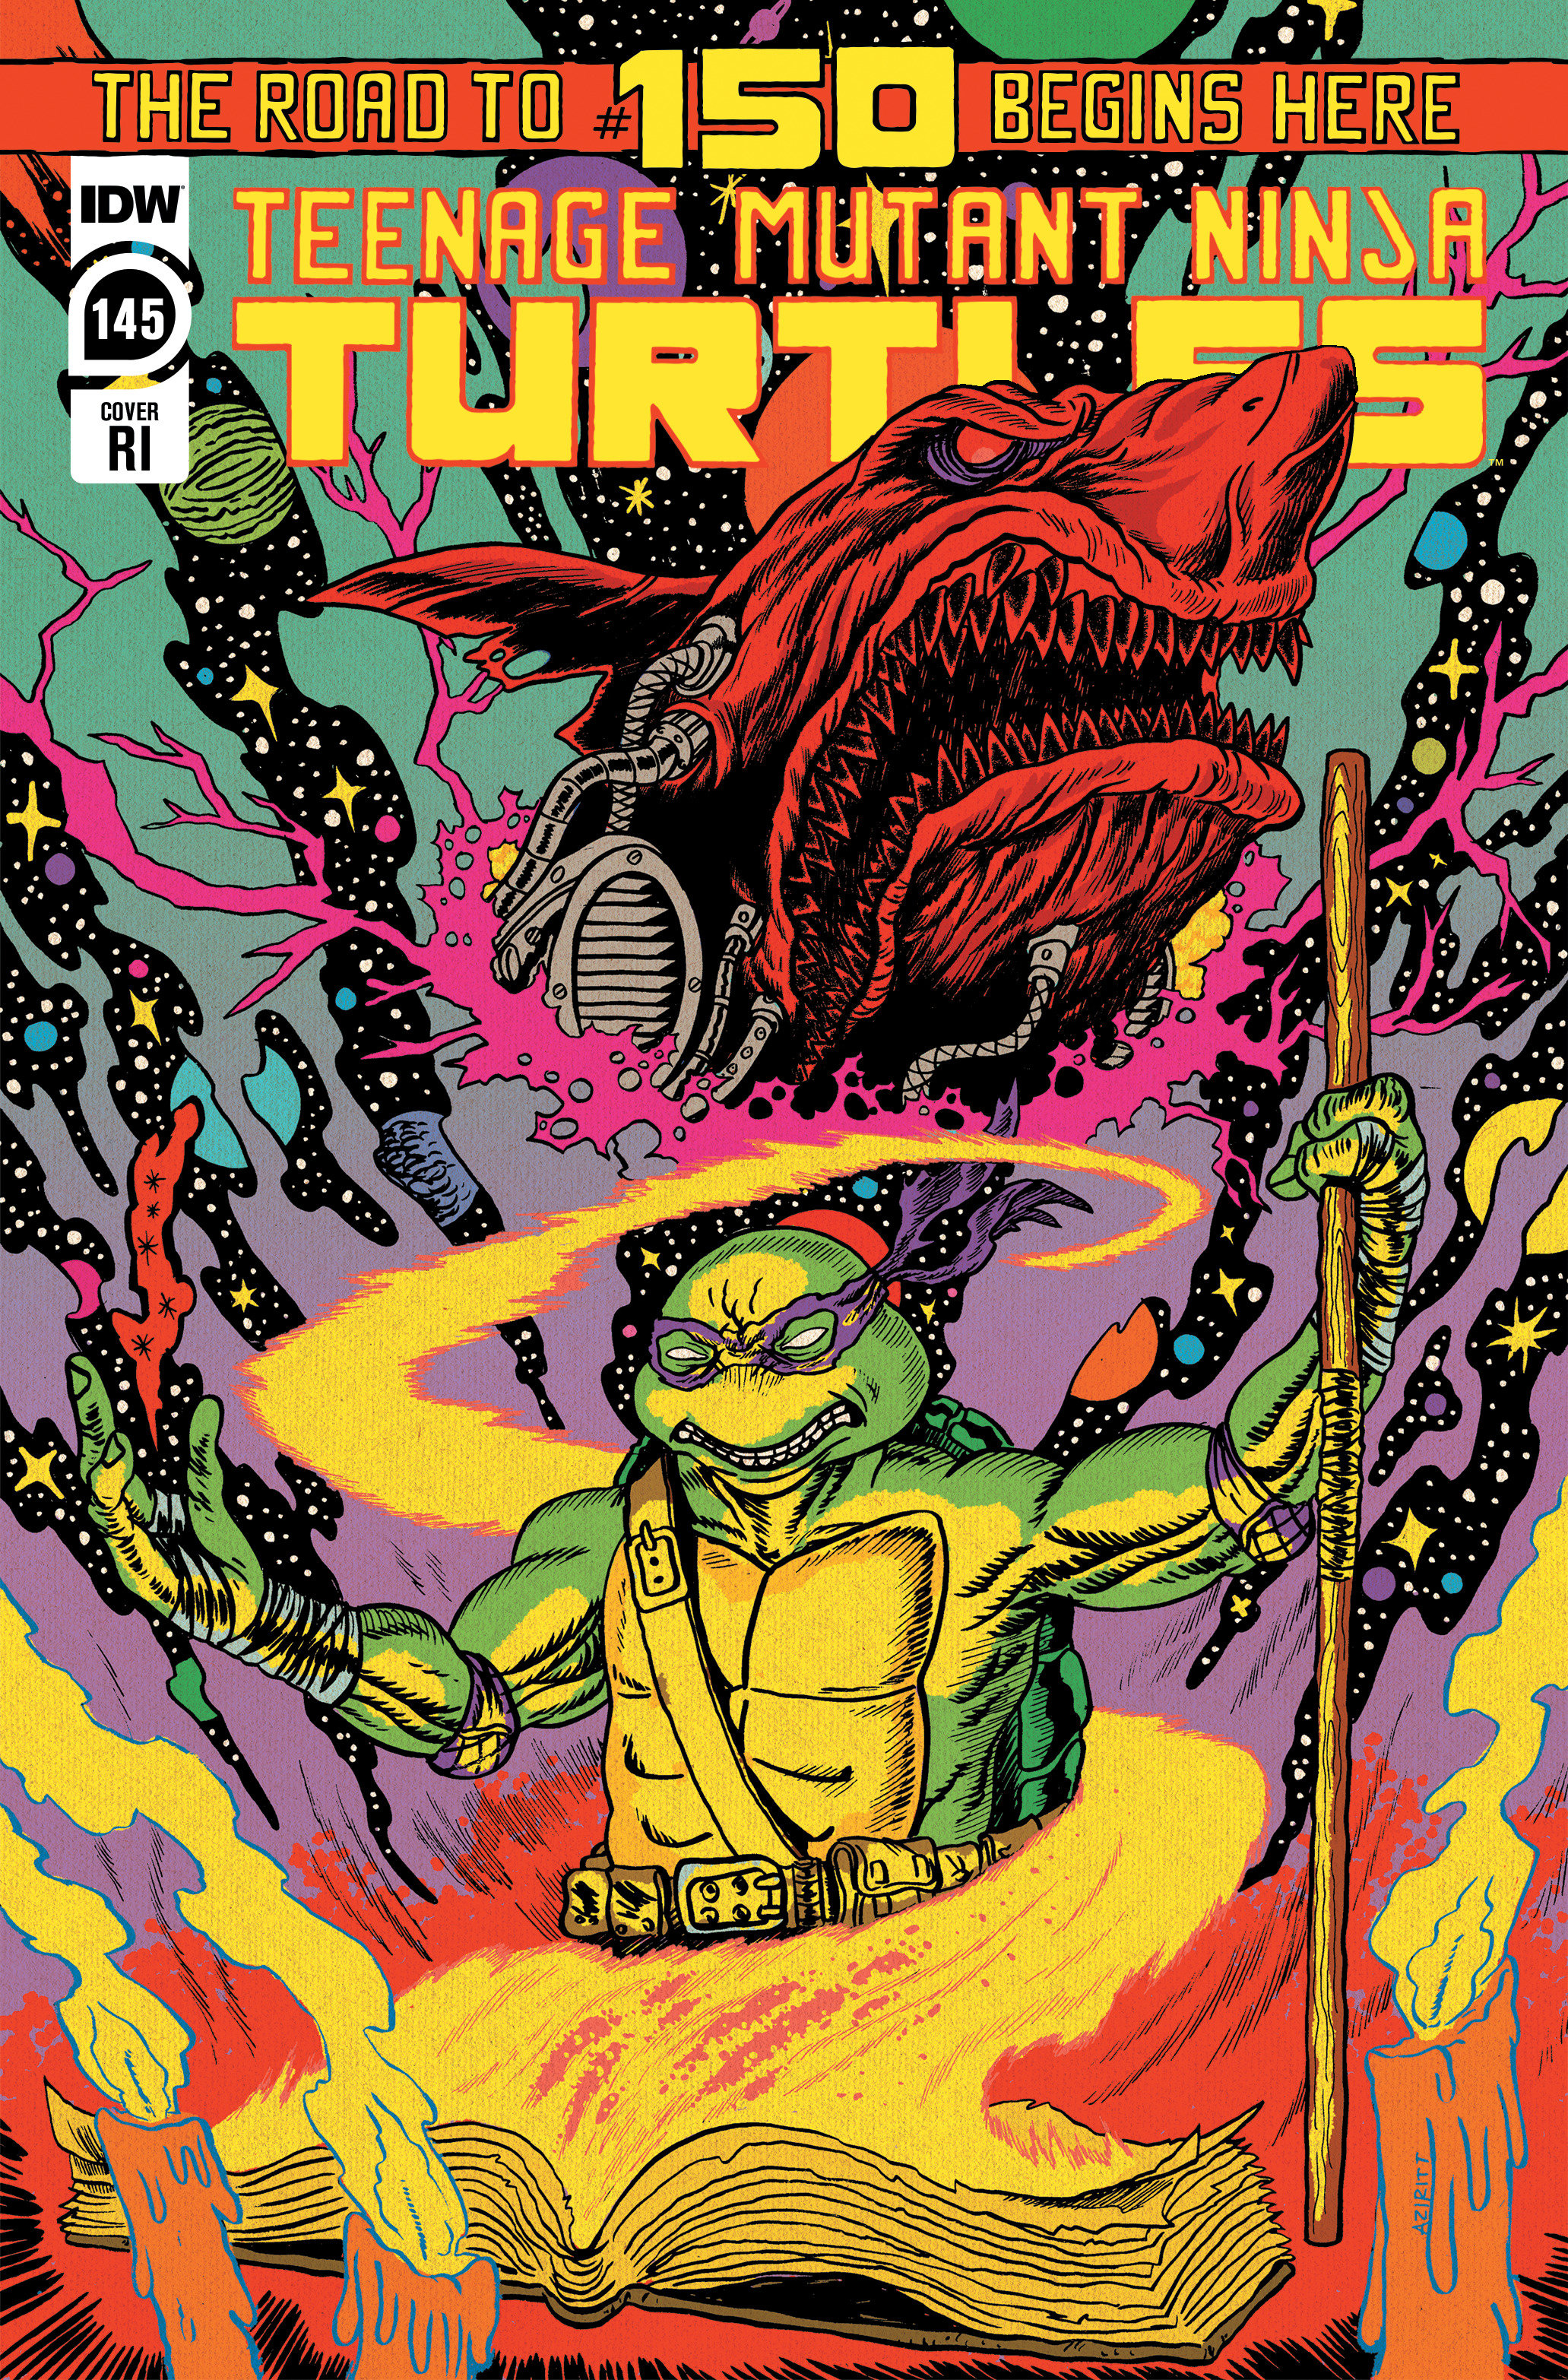 Teenage Mutant Ninja Turtles Ongoing #145 Cover Ziritt 1 for 10 Incentive